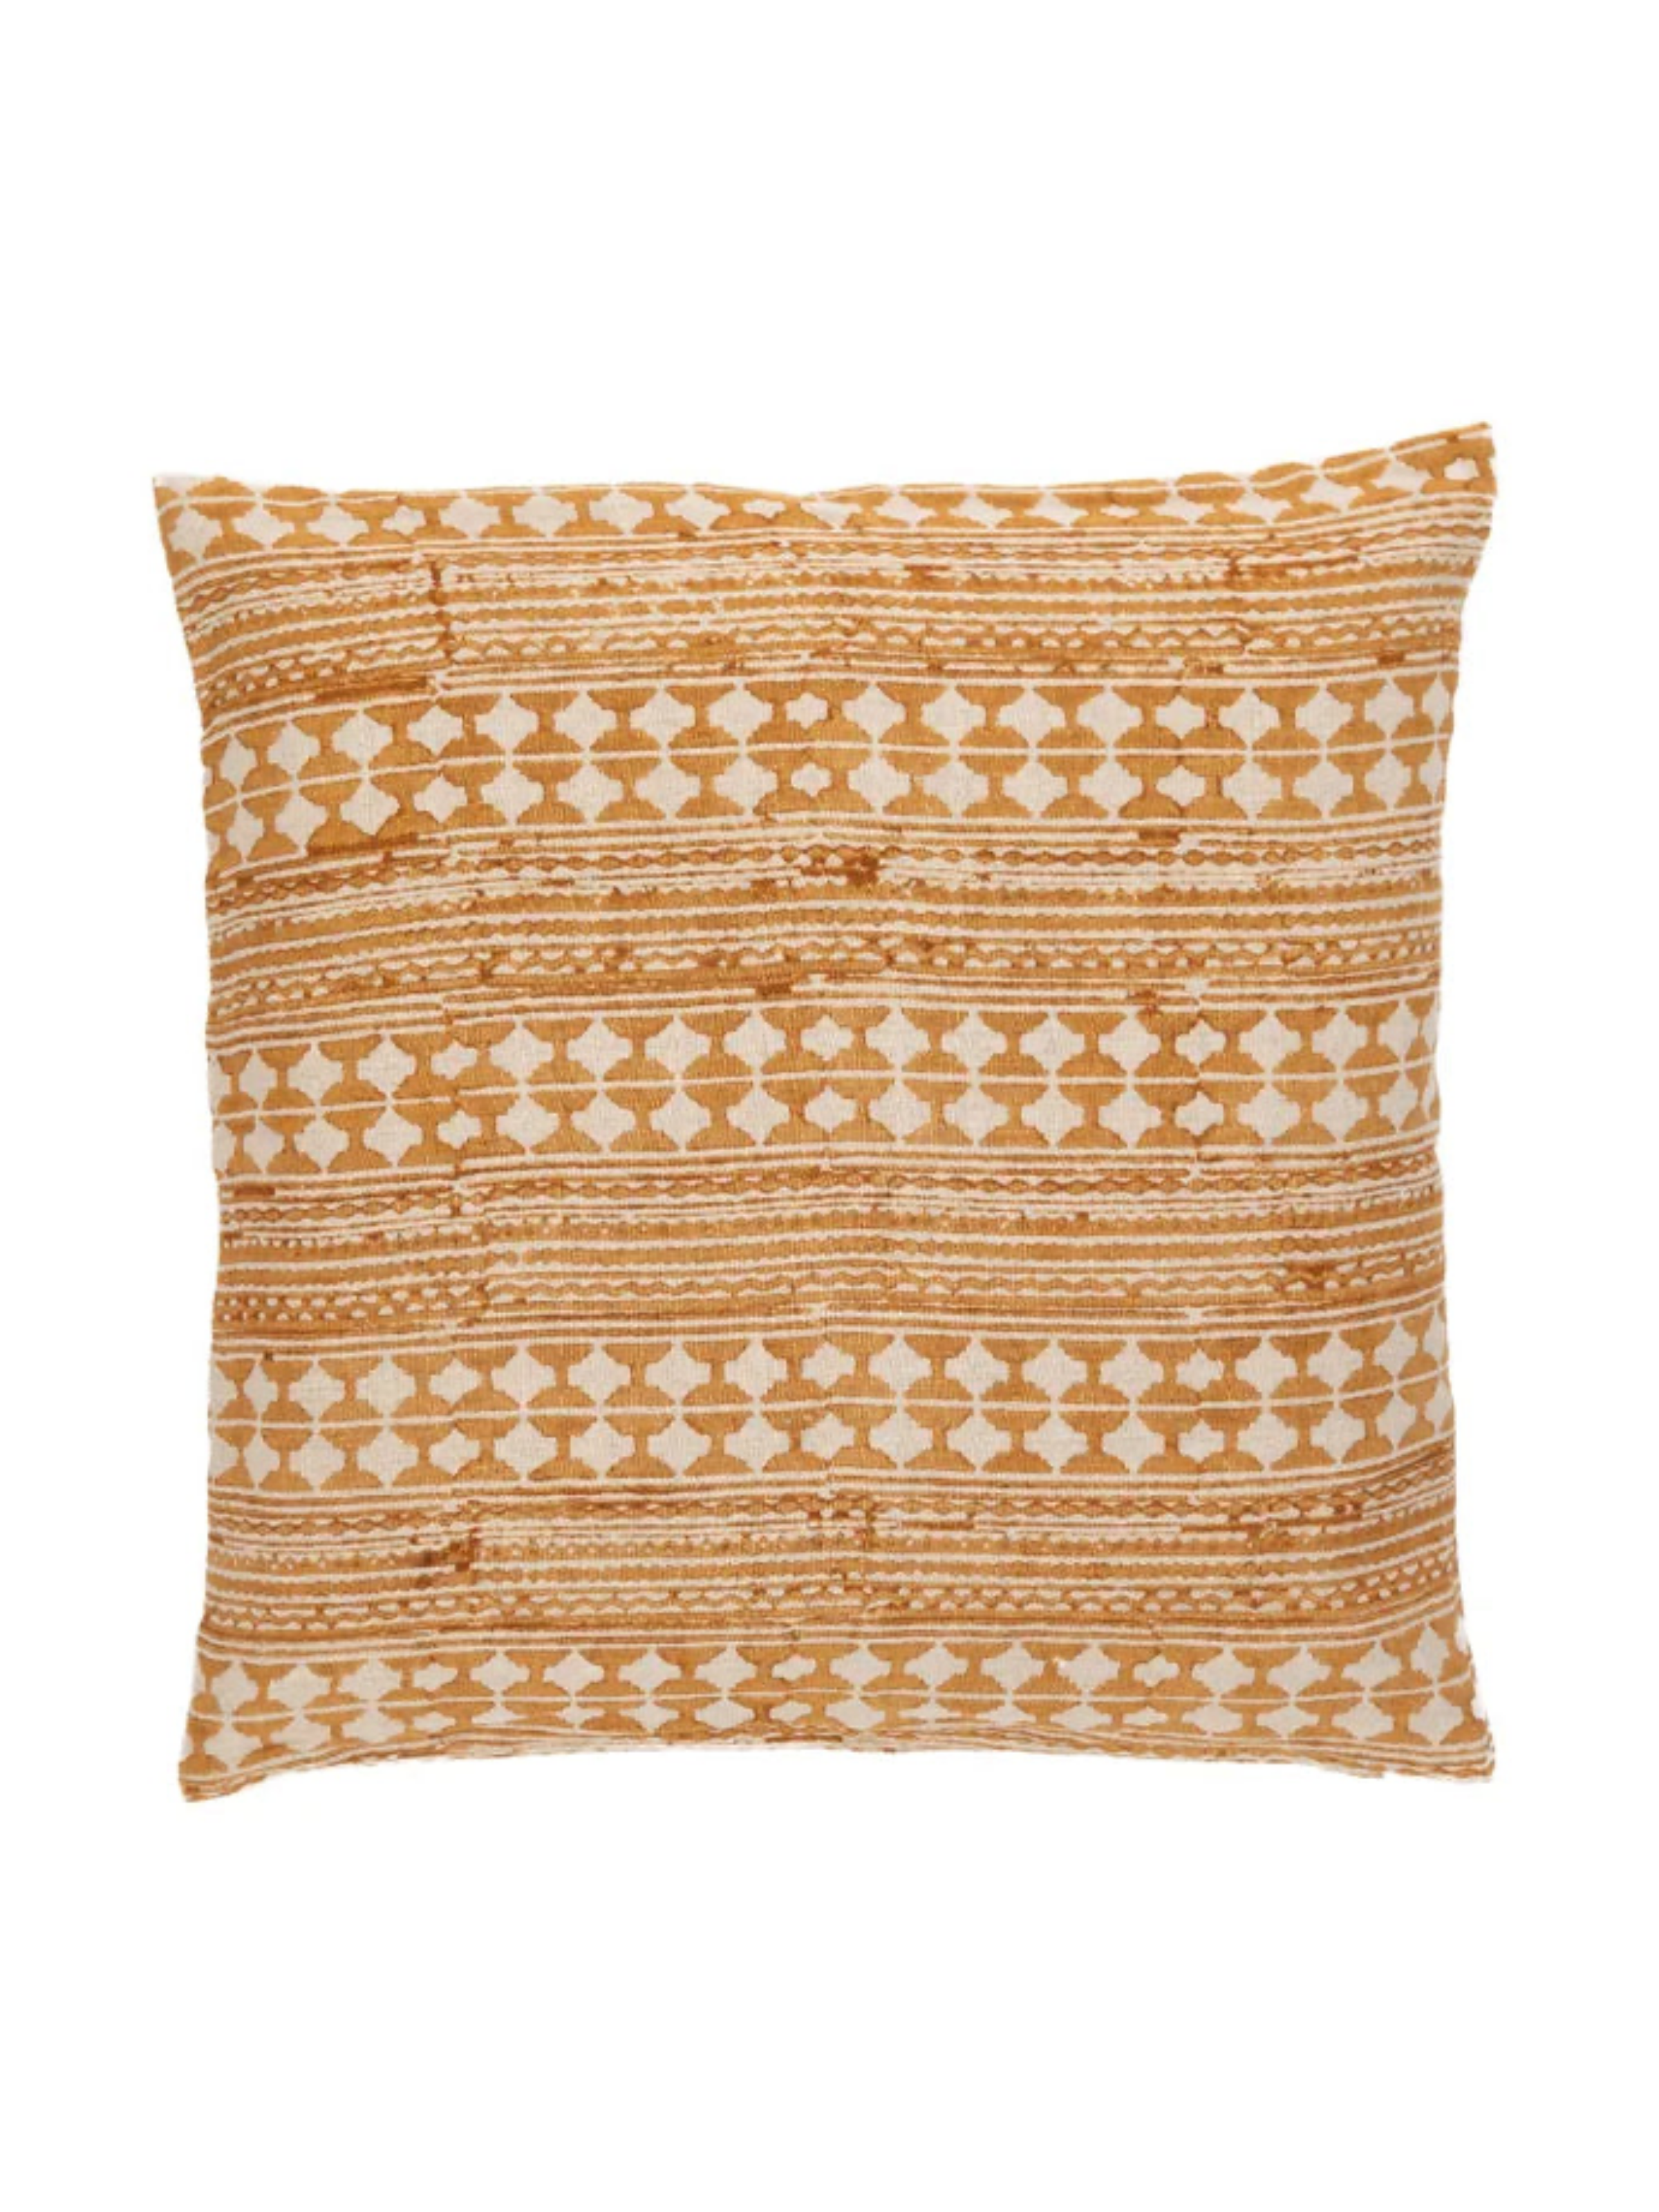 Totonac Ochre Decorative Pillow